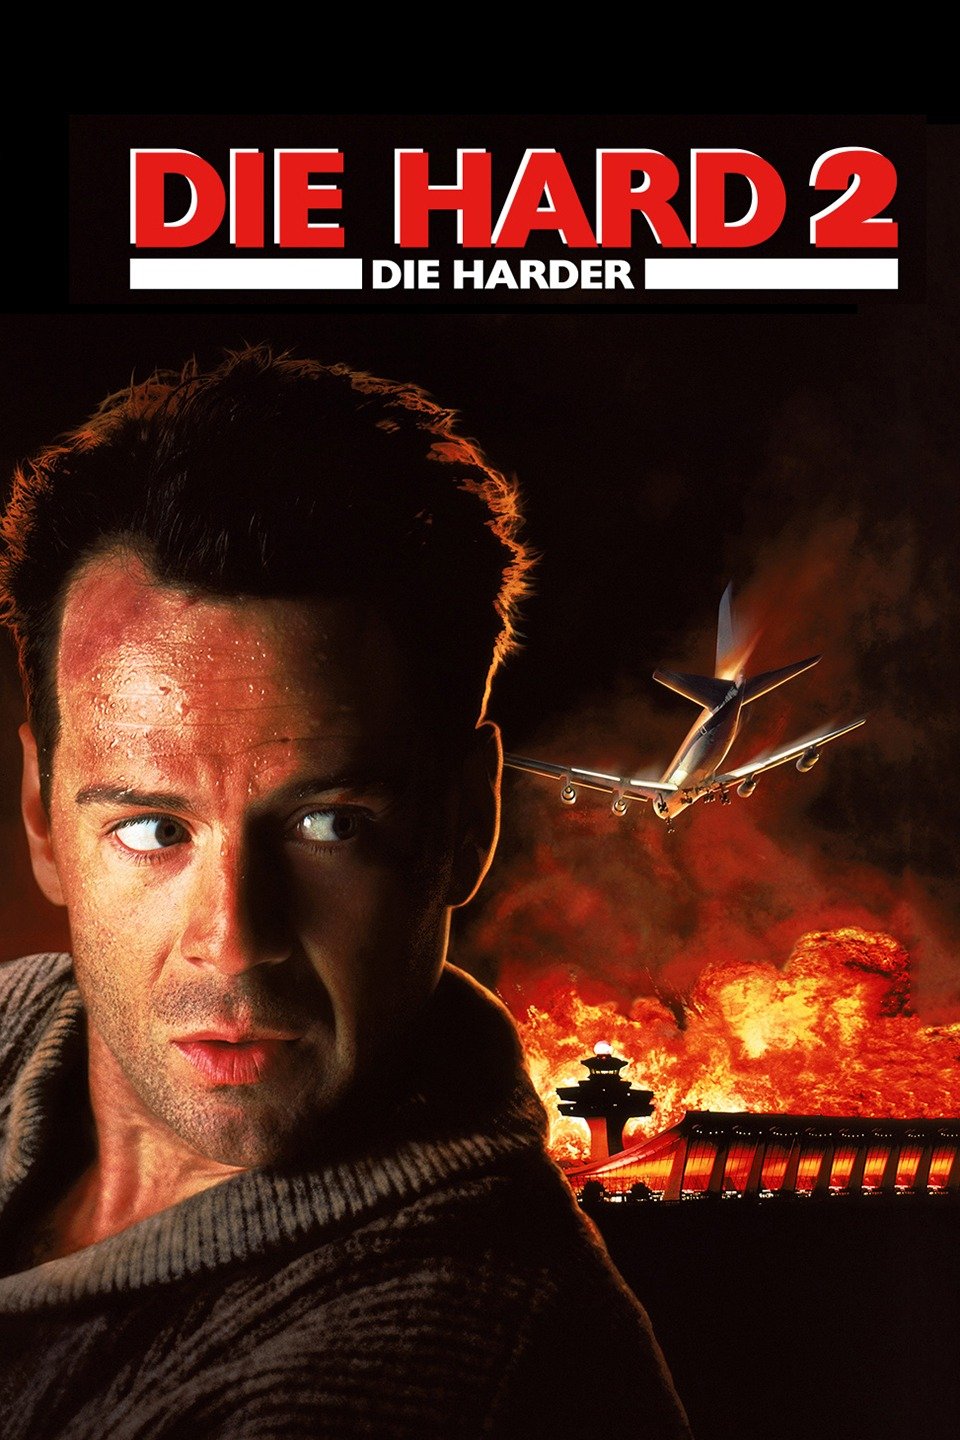 [MINI Super-HQ] Die Hard 2 (1990) ดาย ฮาร์ด : อึดเต็มพิกัด ภาค 2 [1080p] [พากย์ไทย 5.1 + เสียงอังกฤษ DTS] [บรรยายไทย + อังกฤษ] [เสียงไทย + ซับไทย] [OPENLOAD]